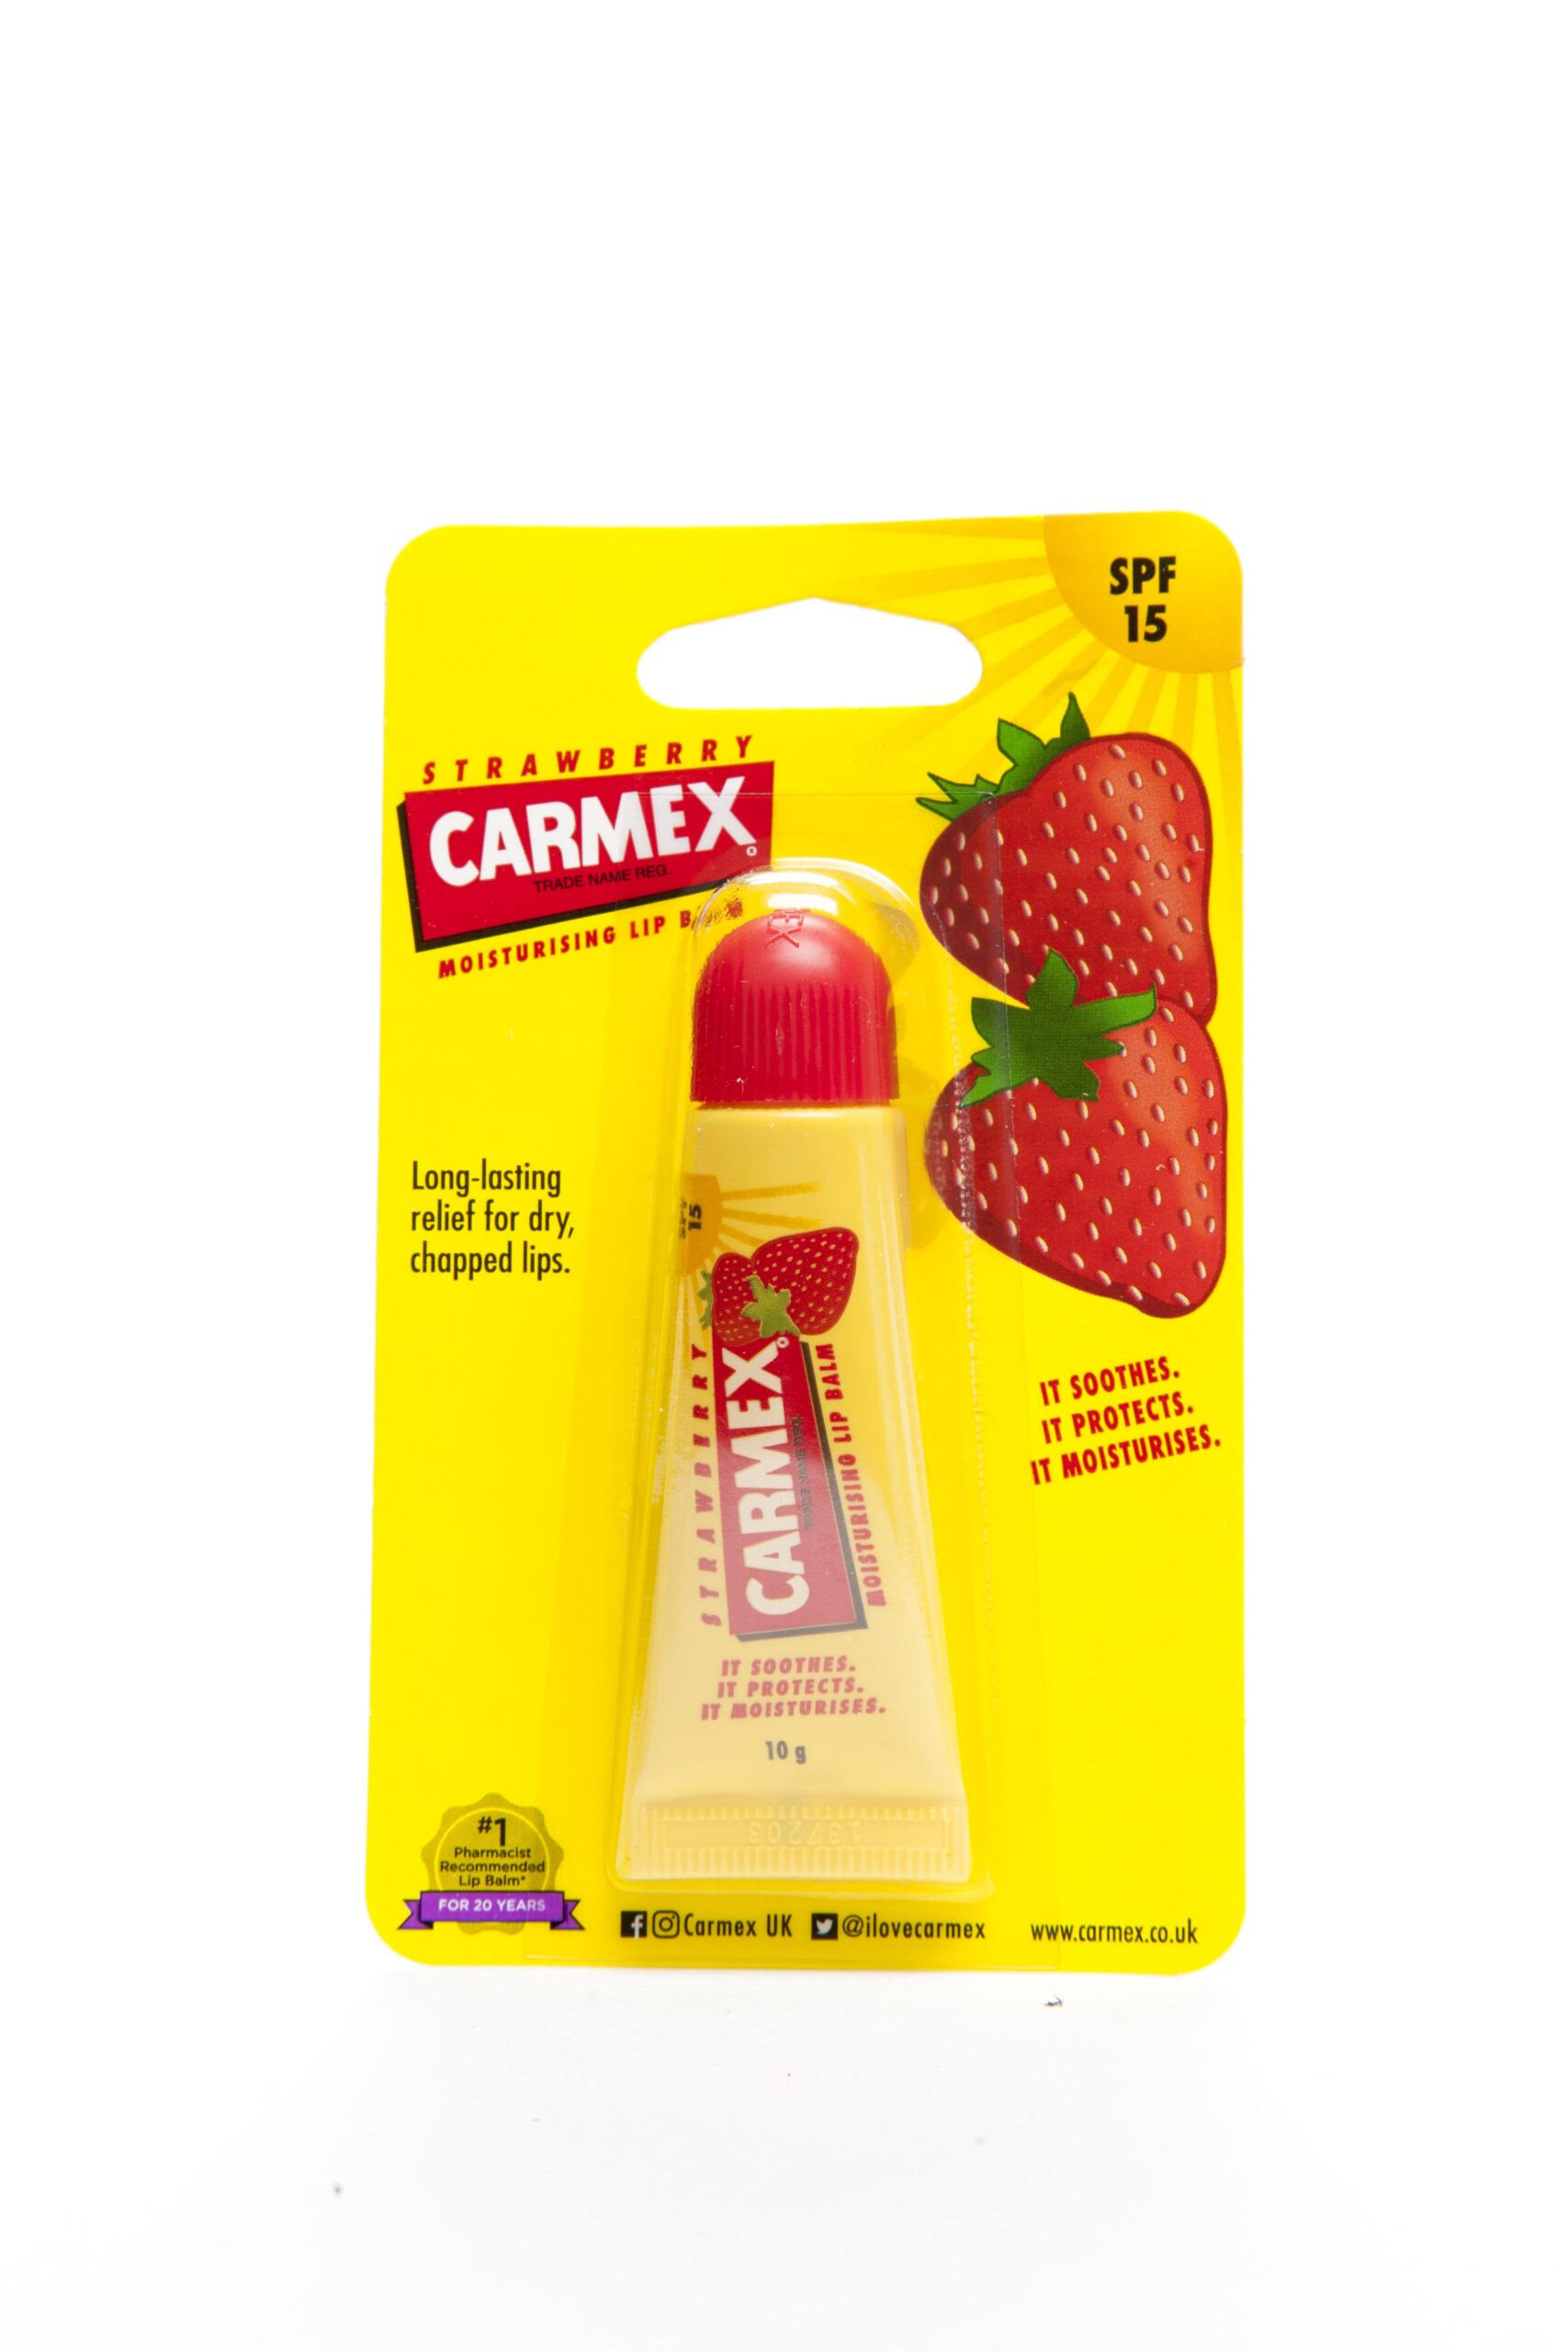 Carmex Strawberry Moisturising Lip Balm - SPF15, 10g